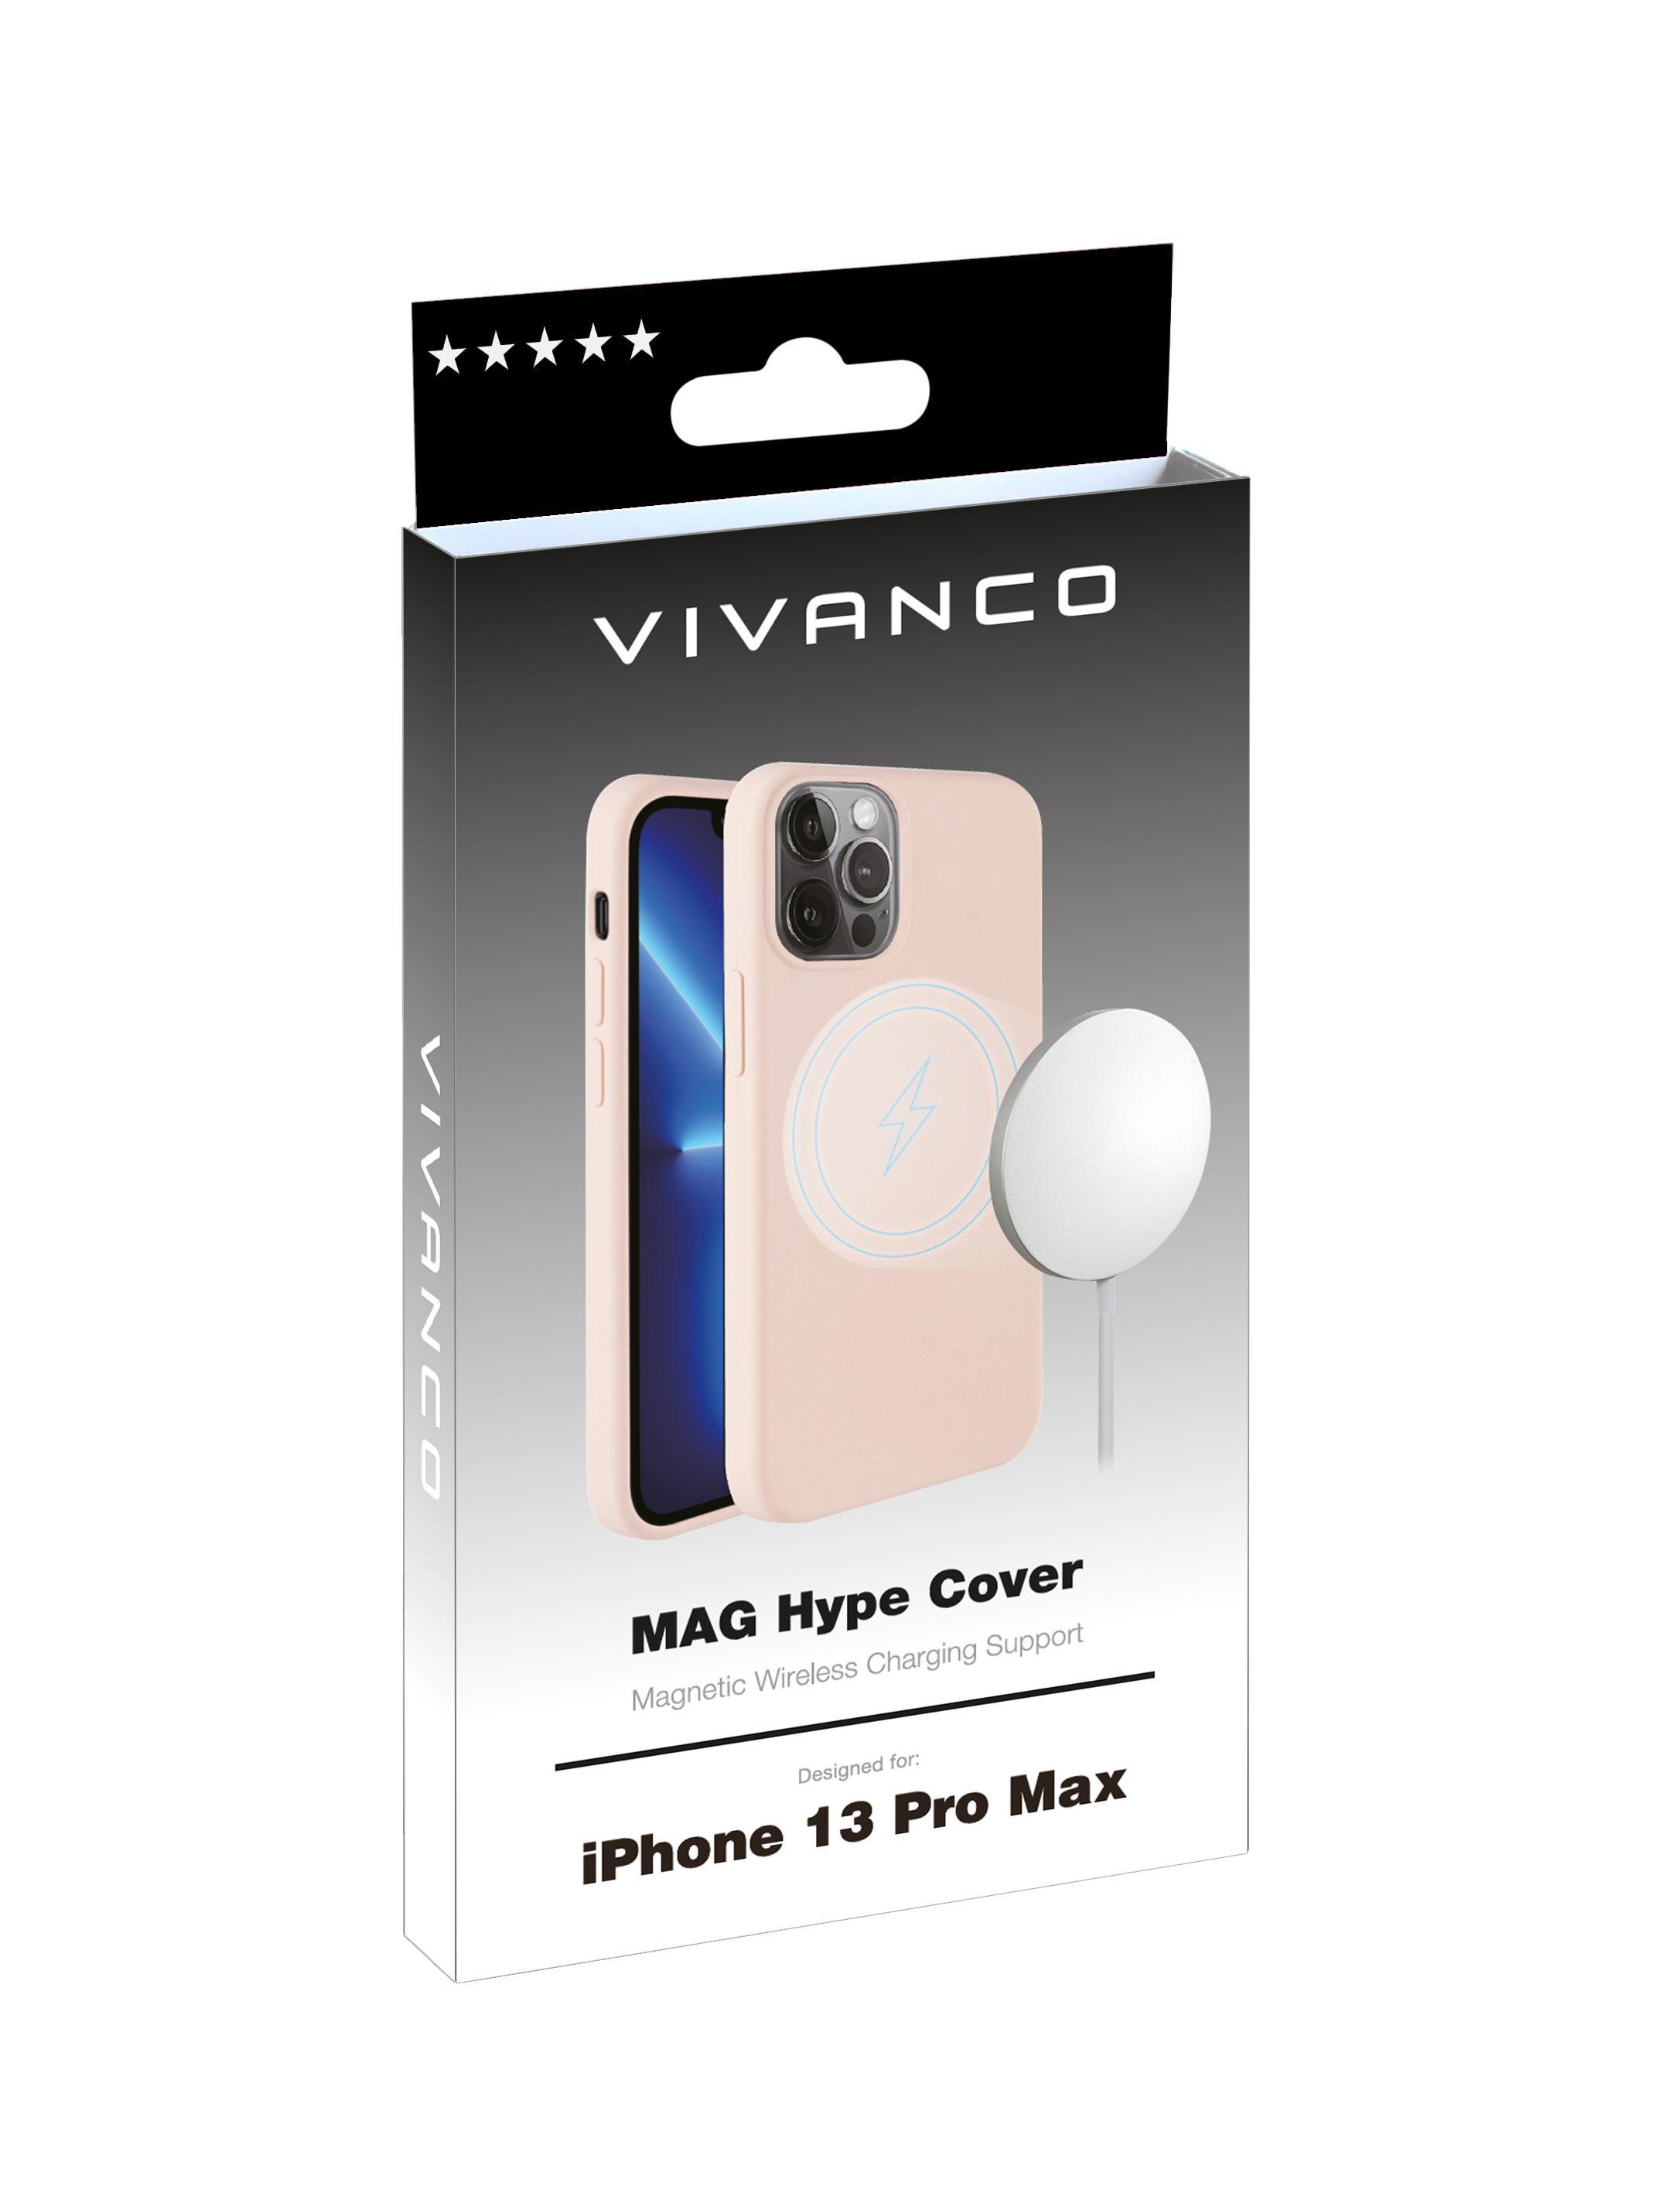 VIVANCO Backcover, Rosa Max, iPhone Apple, Pro Mag 13 Hype,